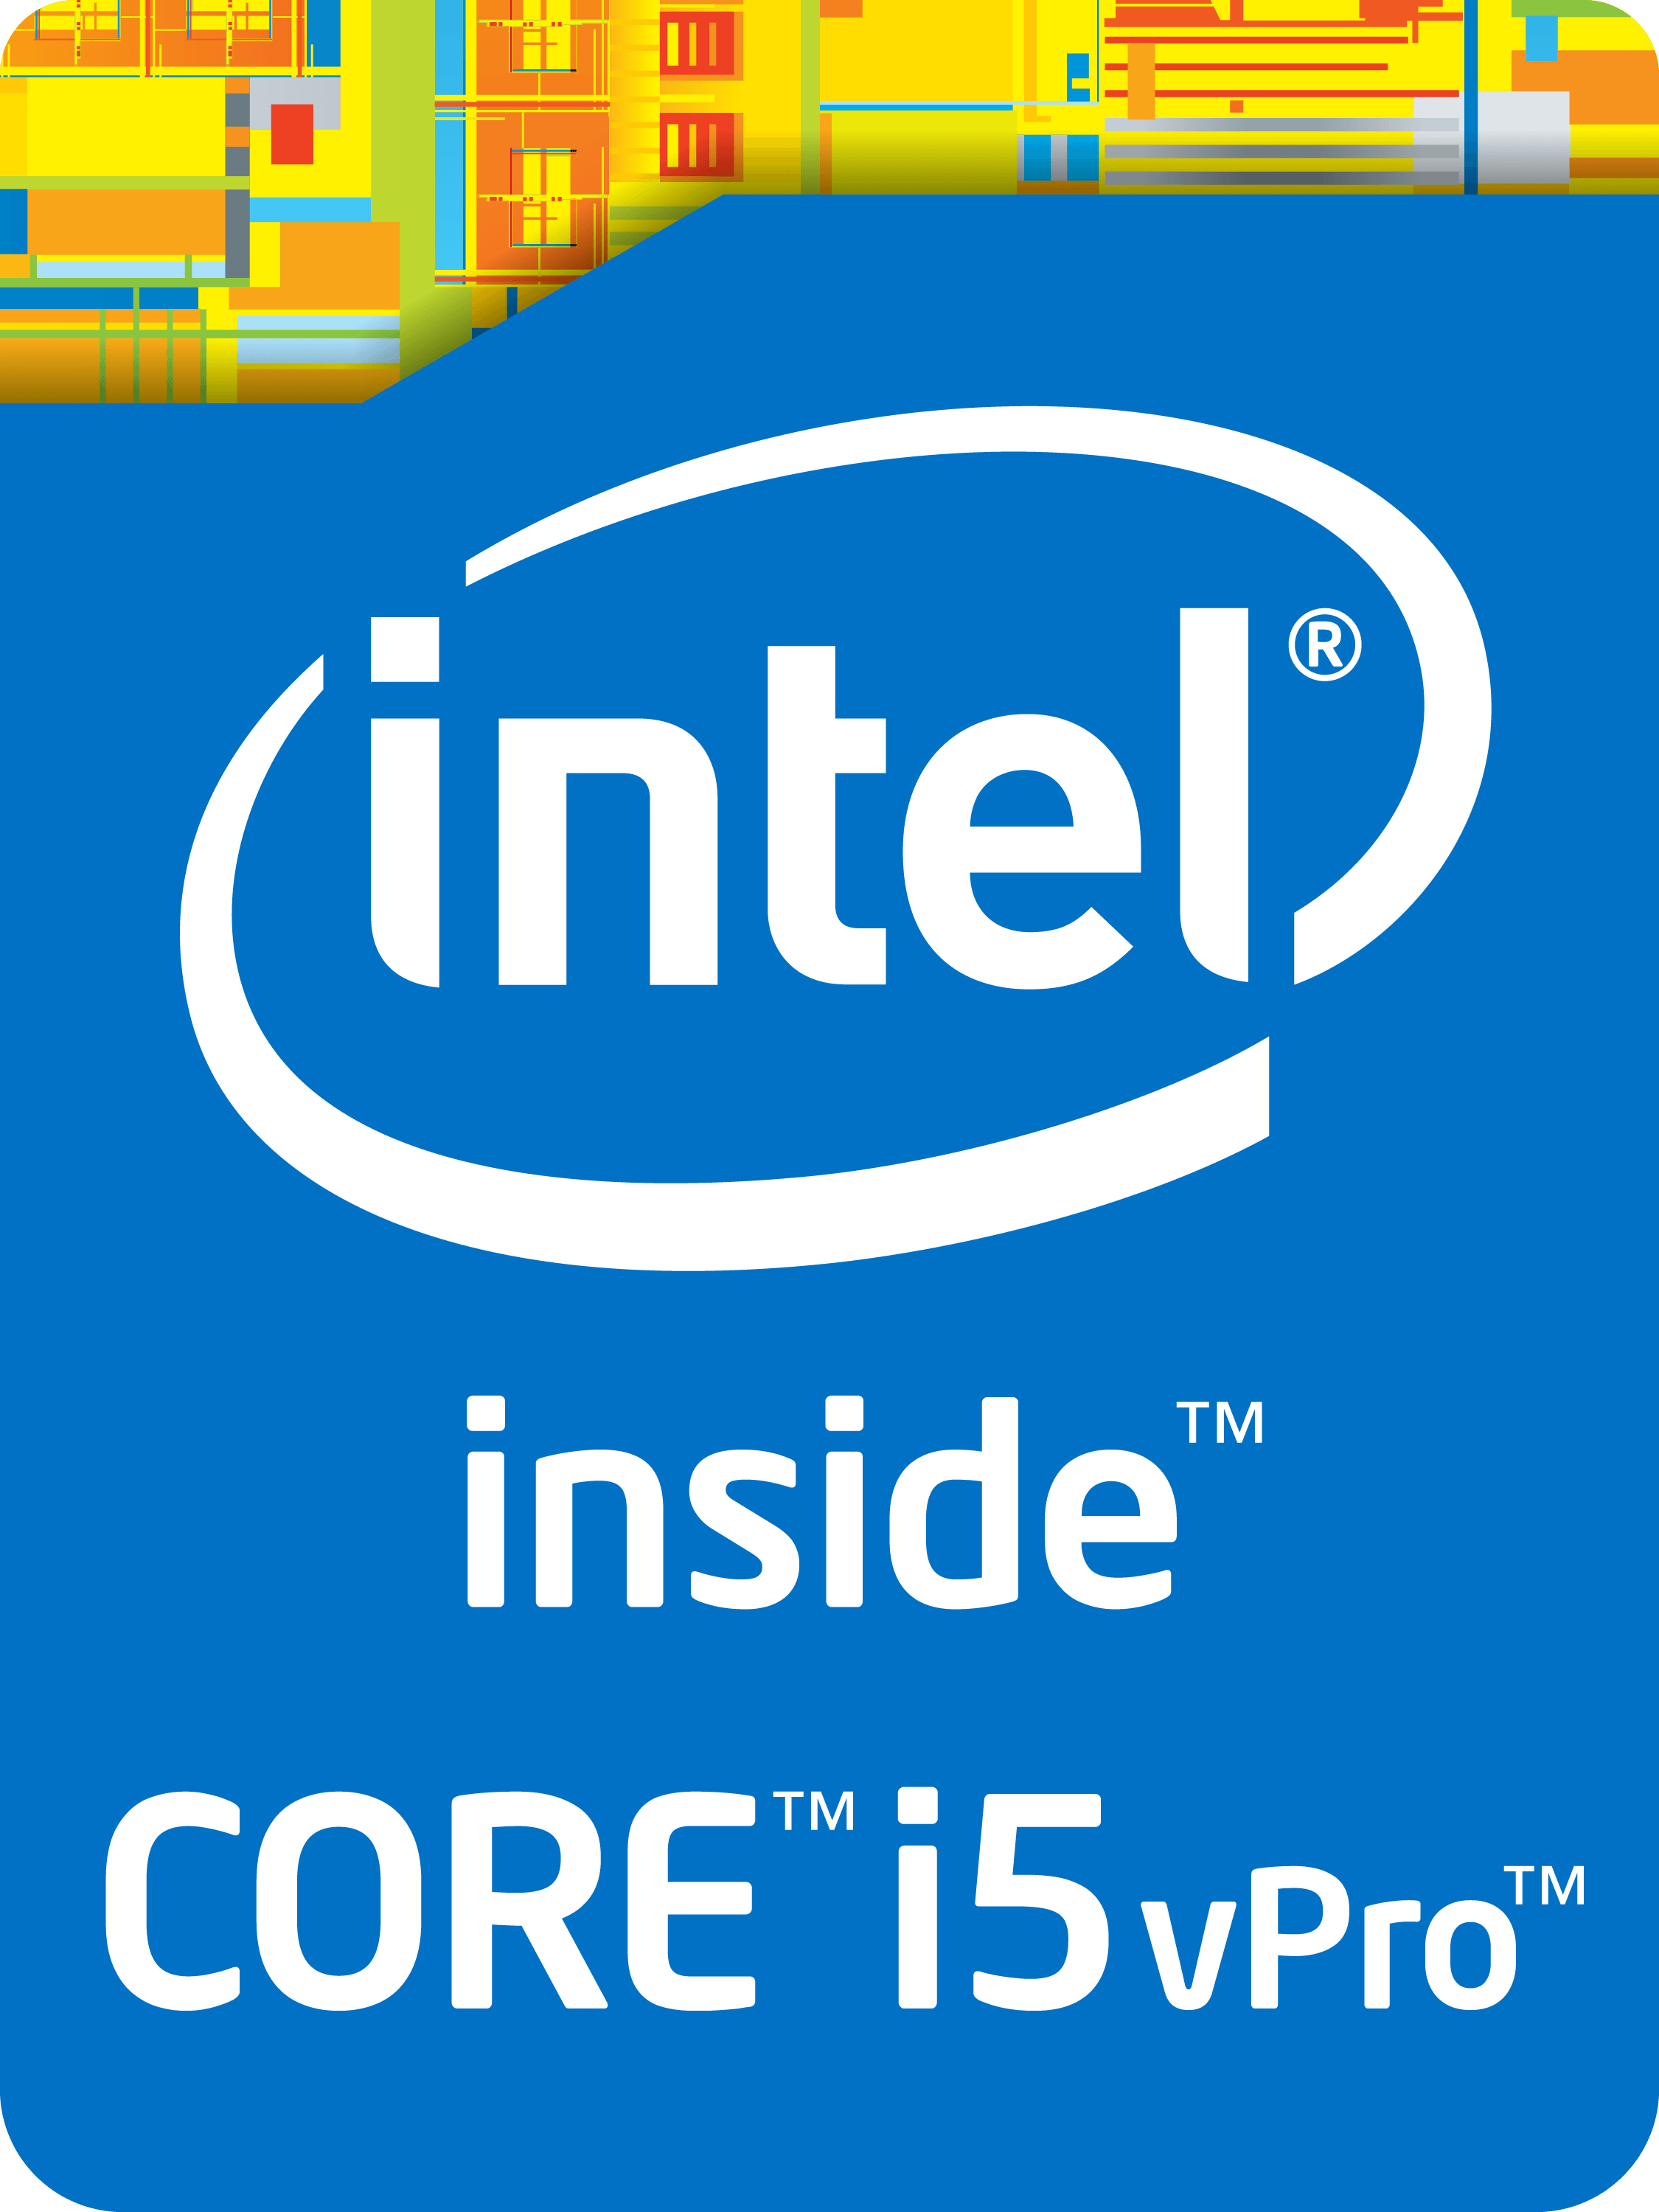 Intel Core I5 Logo - Image - Intel Core i5 vPro logo.png | Logopedia | FANDOM powered by ...